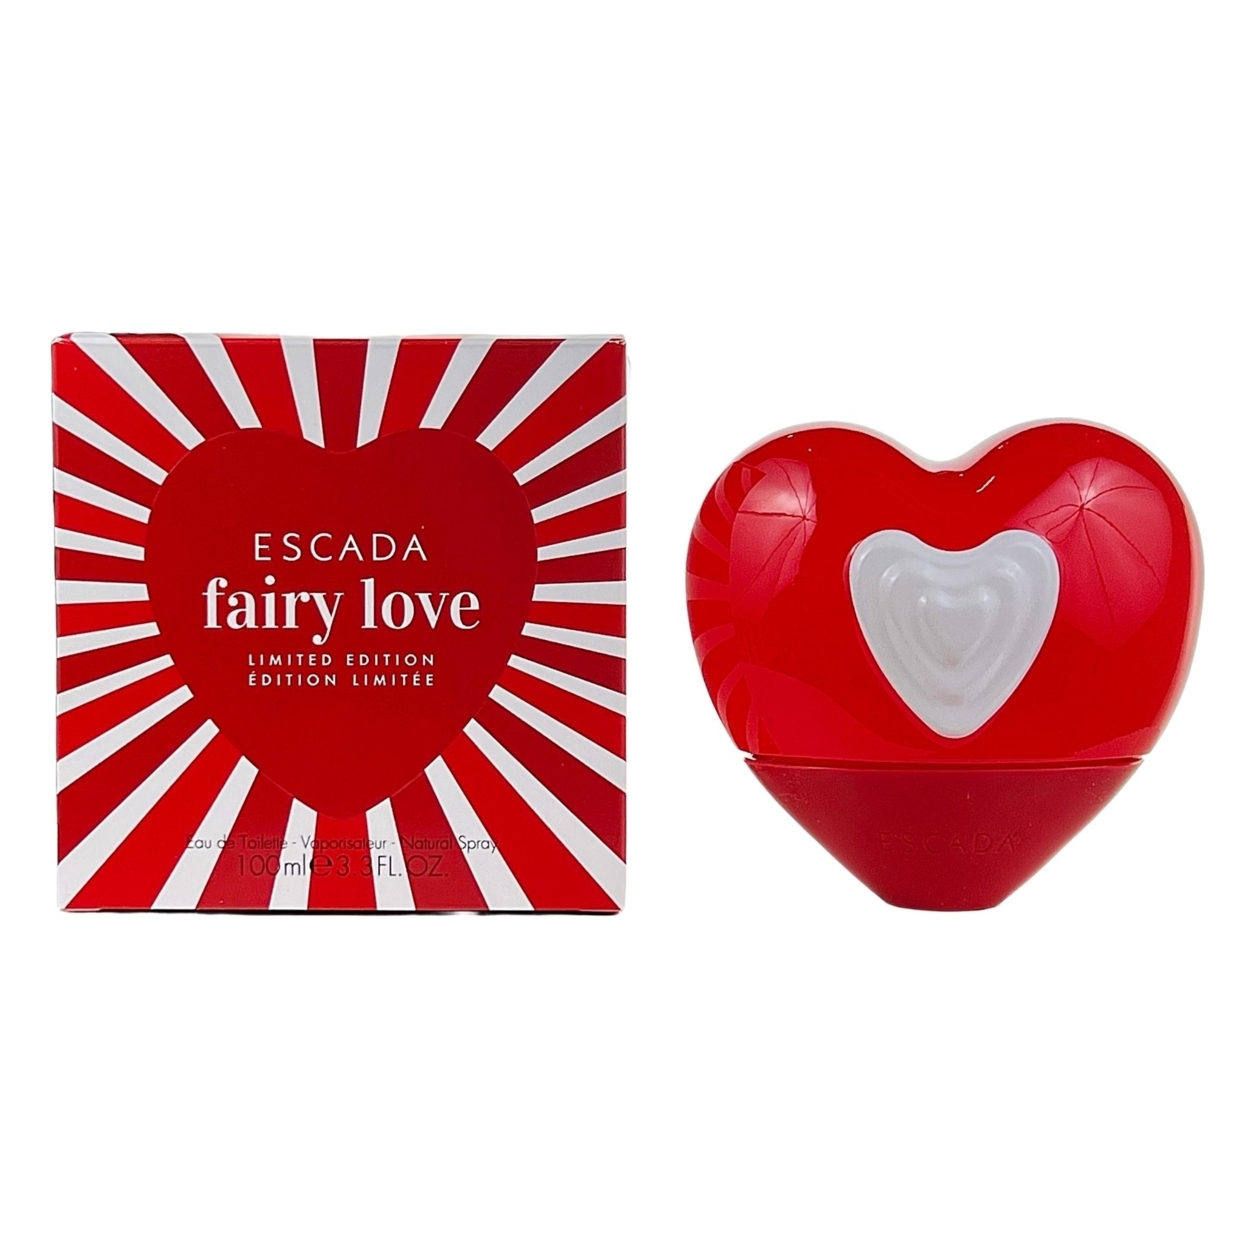 Escada Fairy Love Eau De Toilette For Women 3.3 Oz / 100 Ml - Spray - Limited Edition